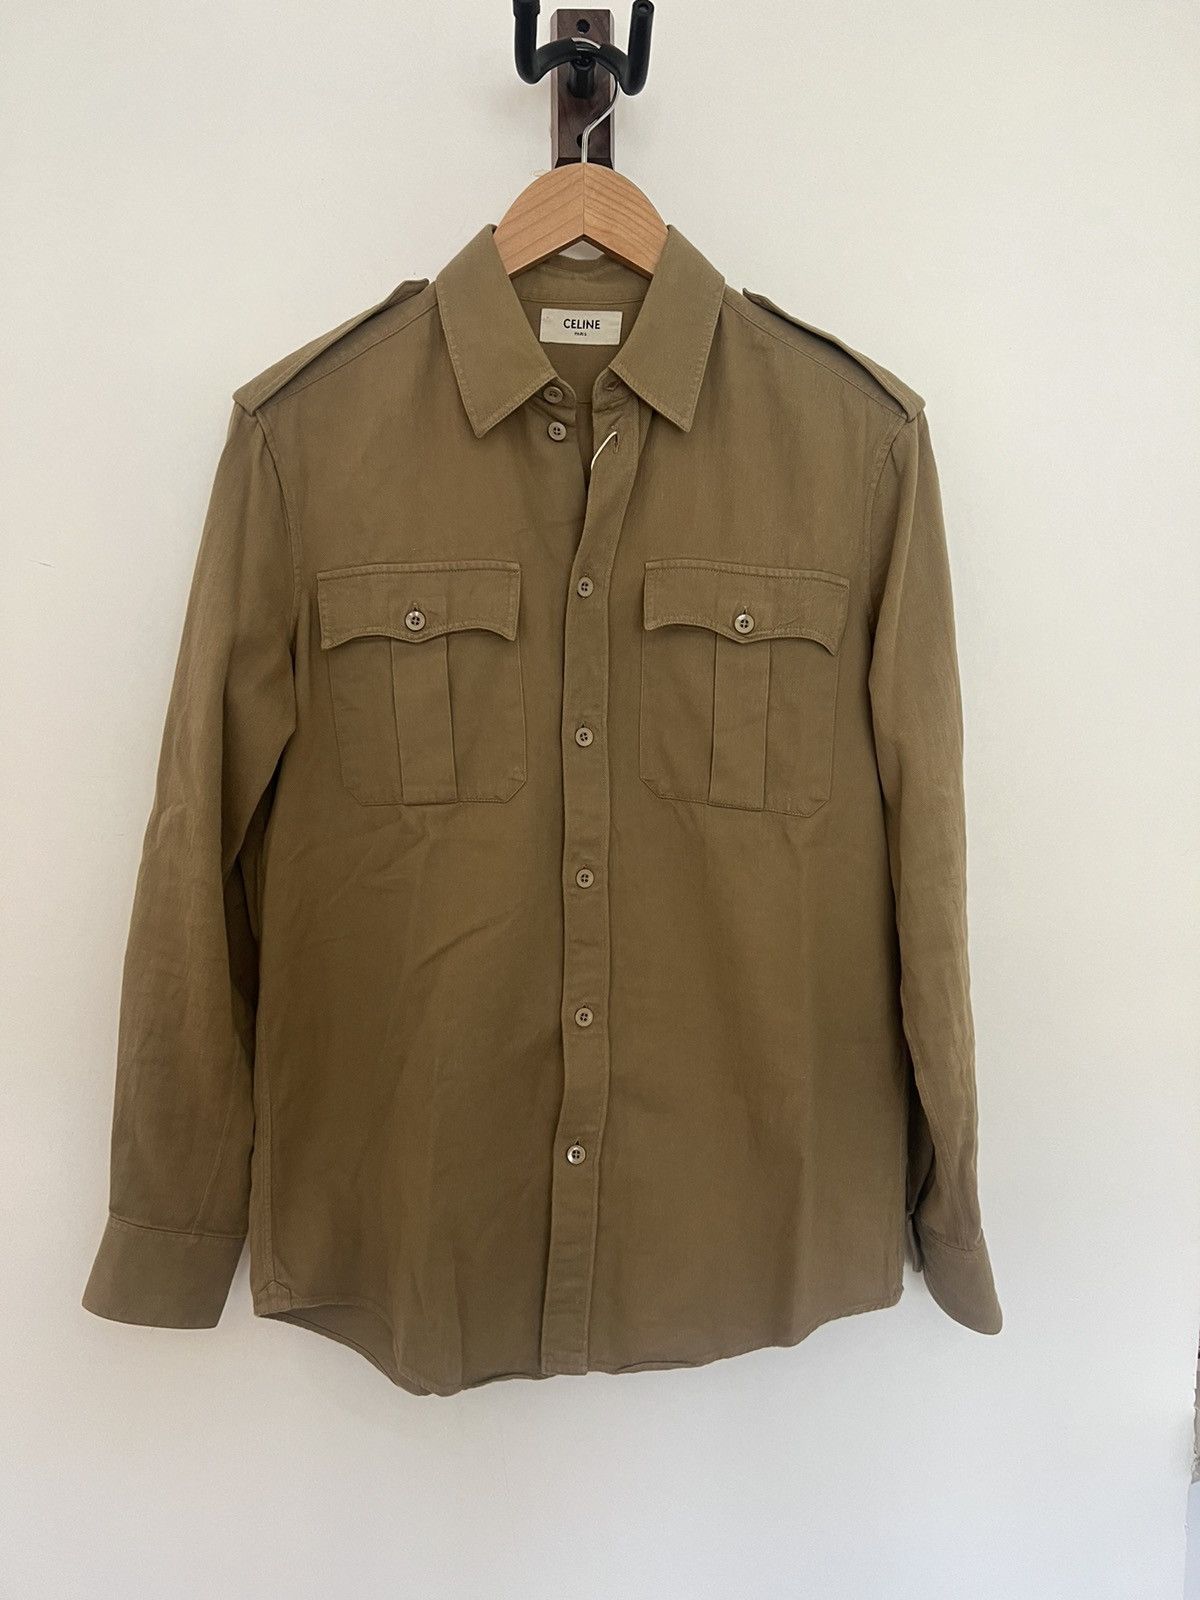 image of Celine x Hedi Slimane Khaki Army Shirt, Men's (Size Small)